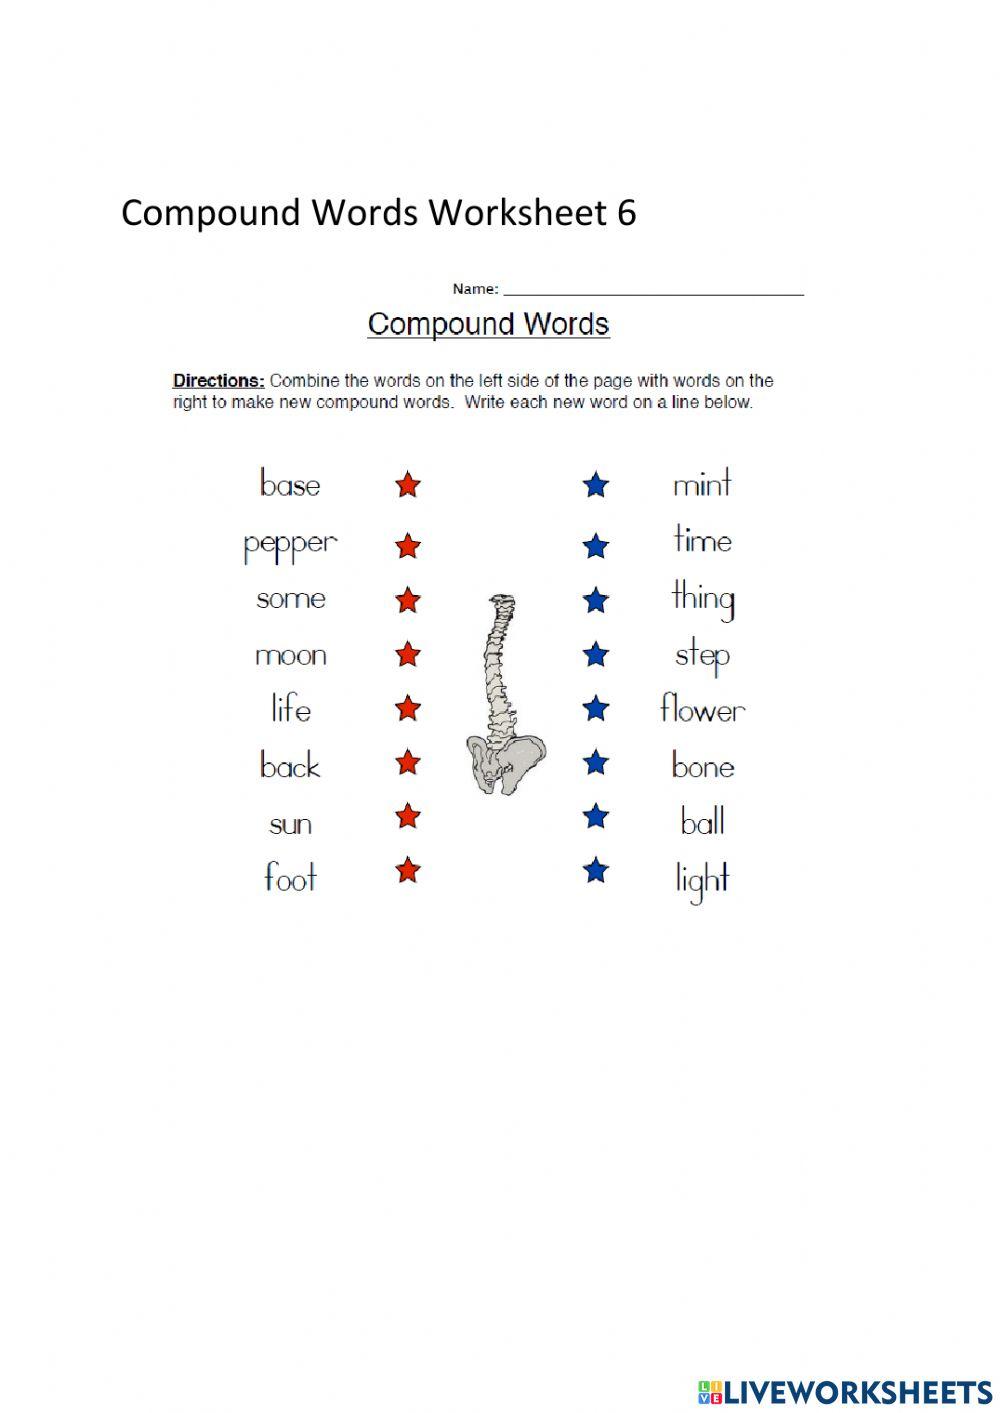 Compound Words Worksheet 6